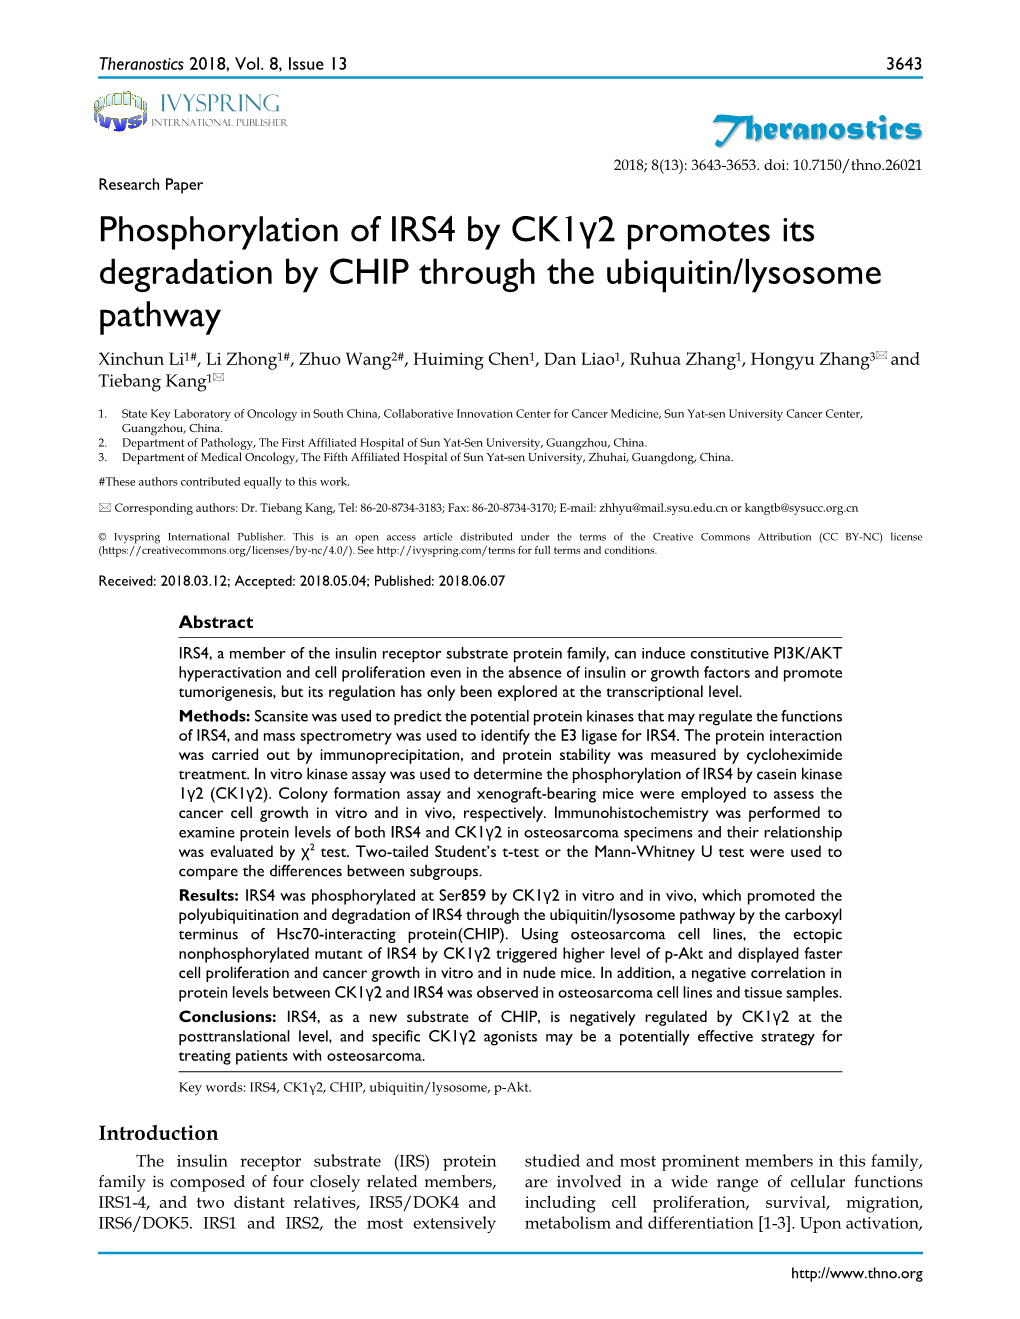 Theranostics Phosphorylation of IRS4 by Ck1γ2 Promotes Its Degradation